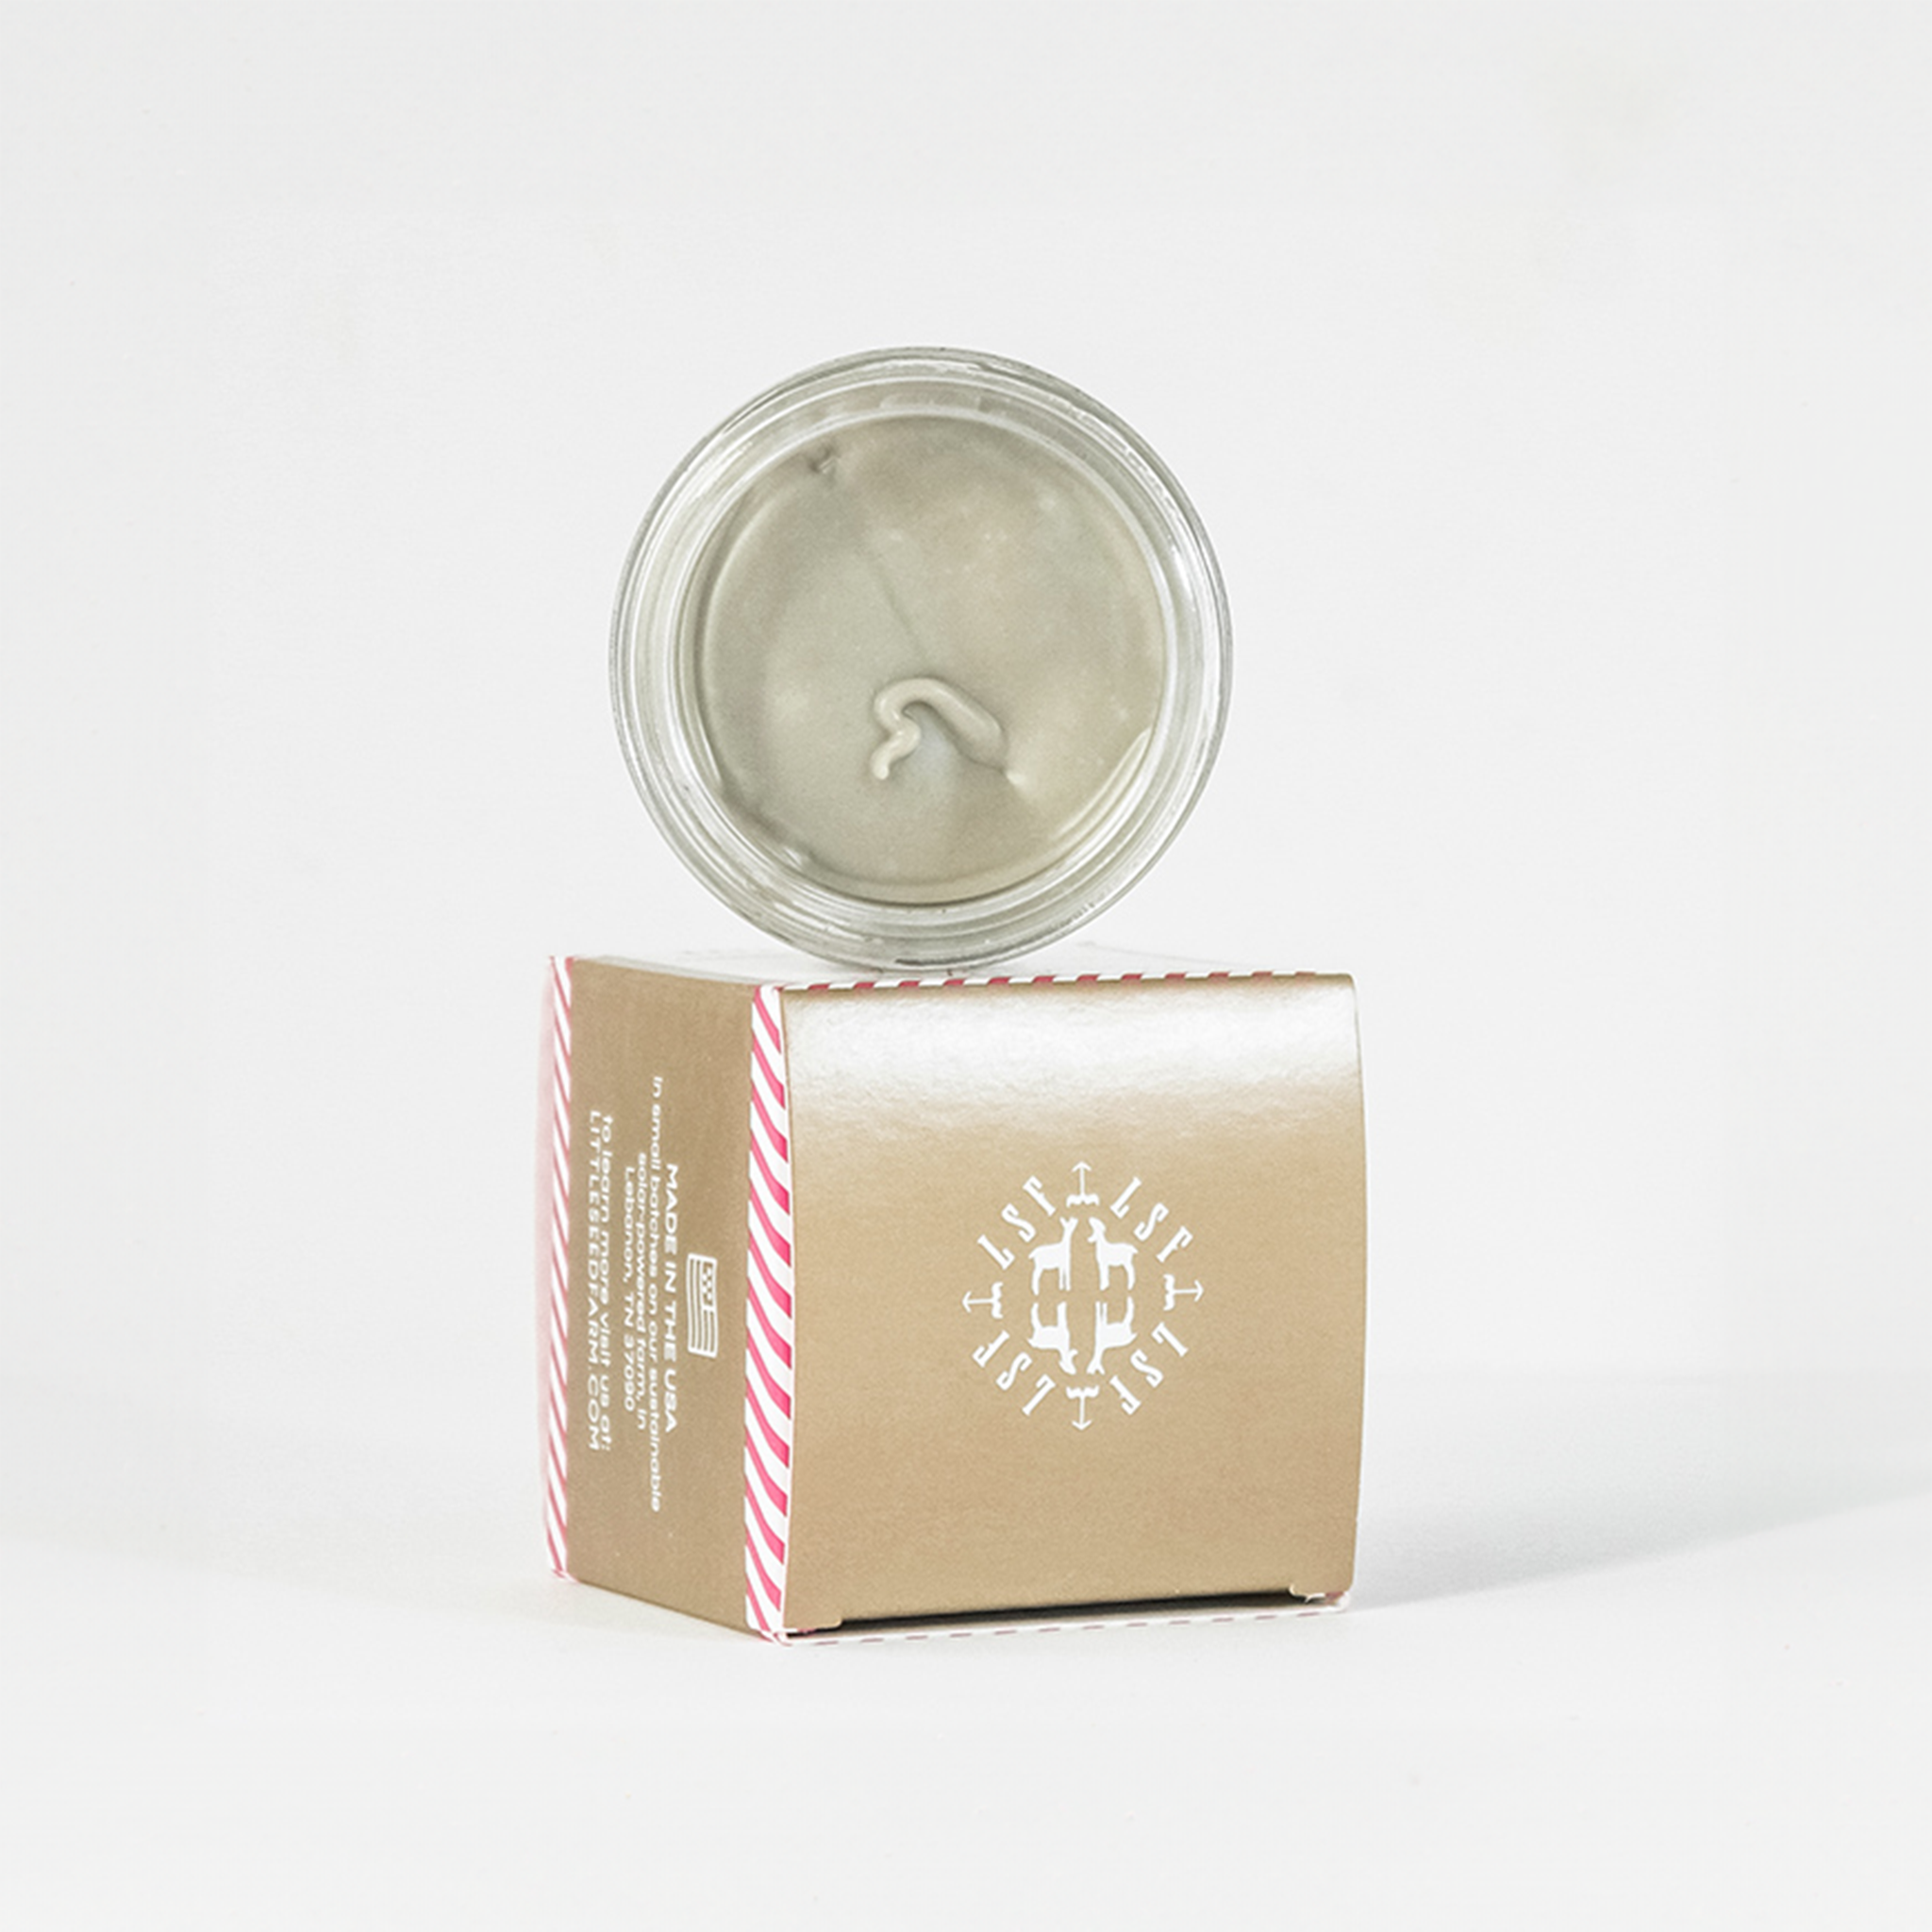 Holiday Deodorant Cream - Seasonal Release